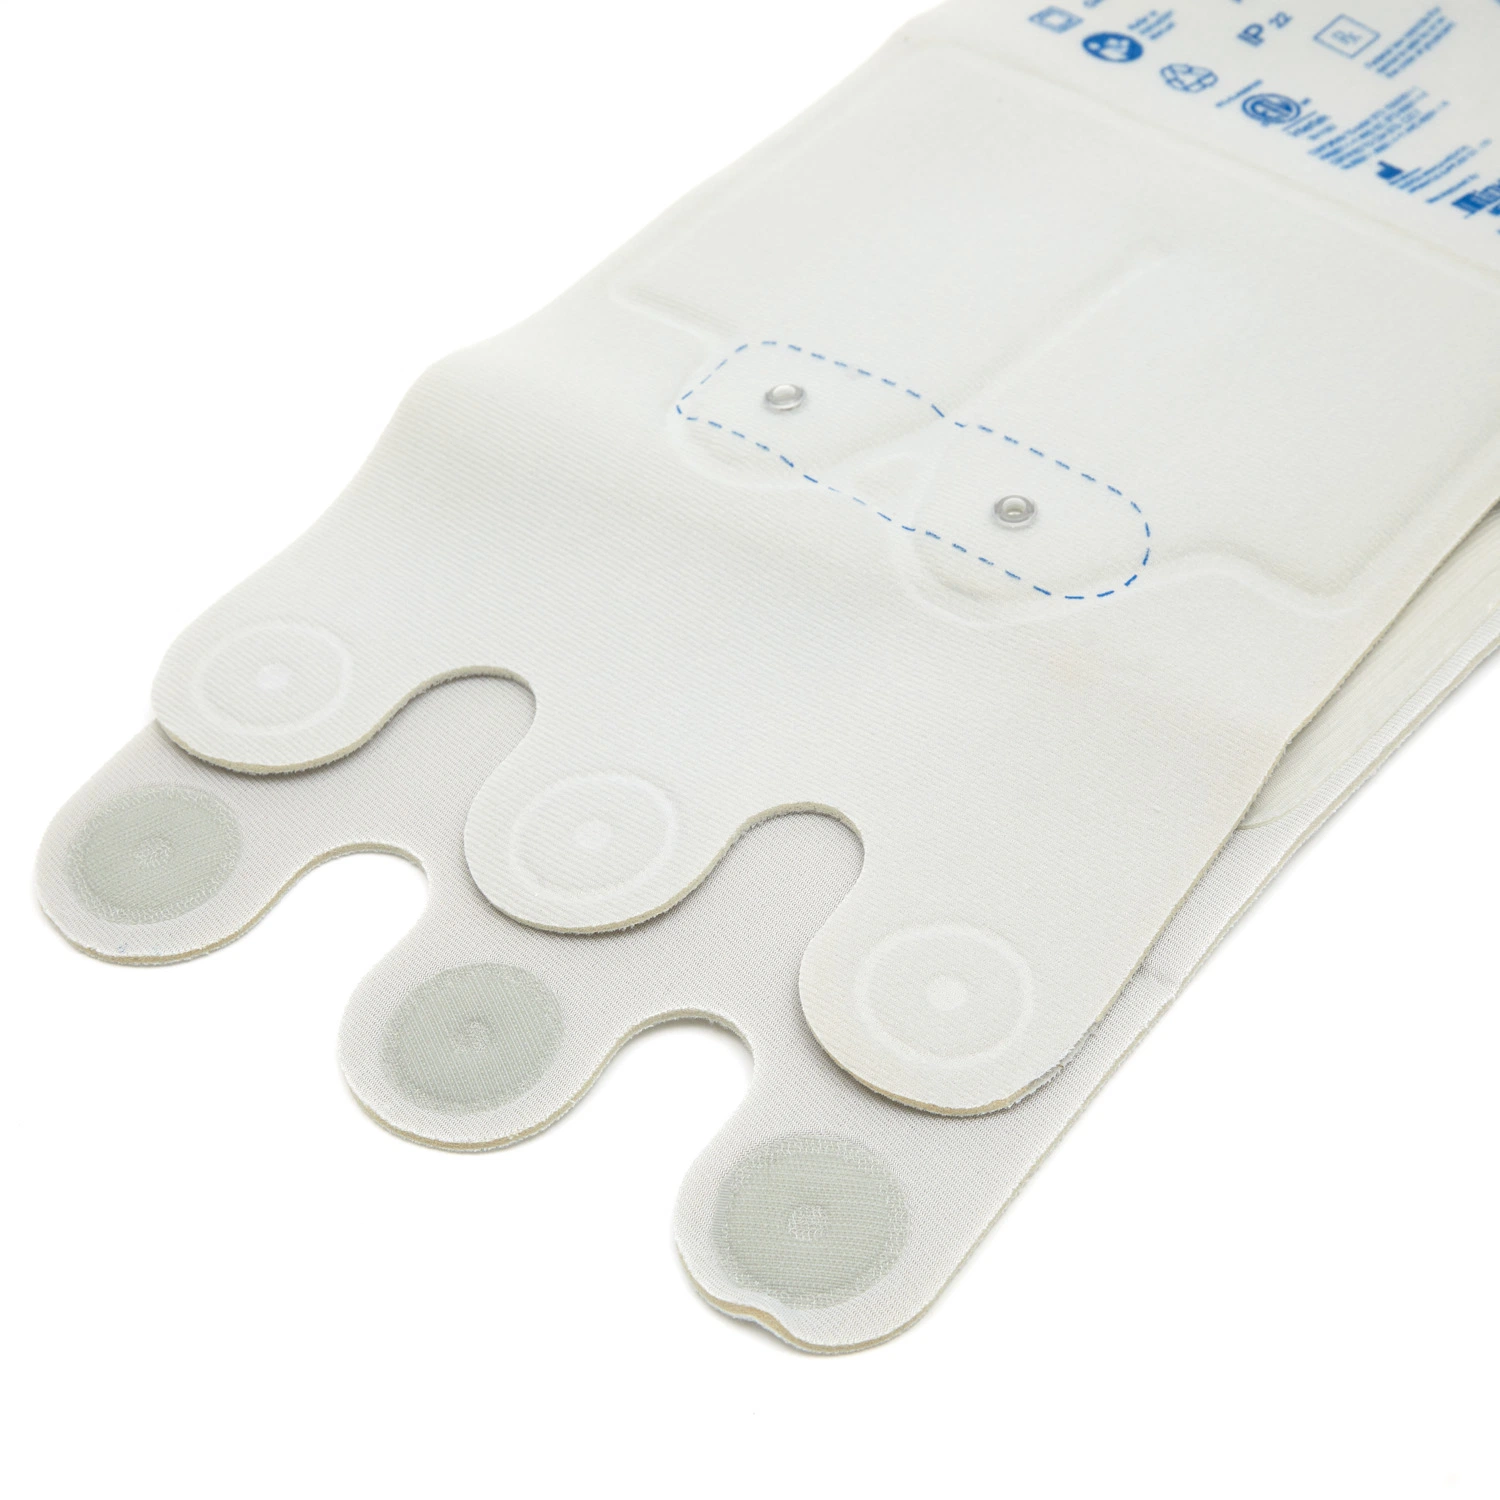 Ehabilitation Massager Machine Leg Dvt Air Pressure Therapy